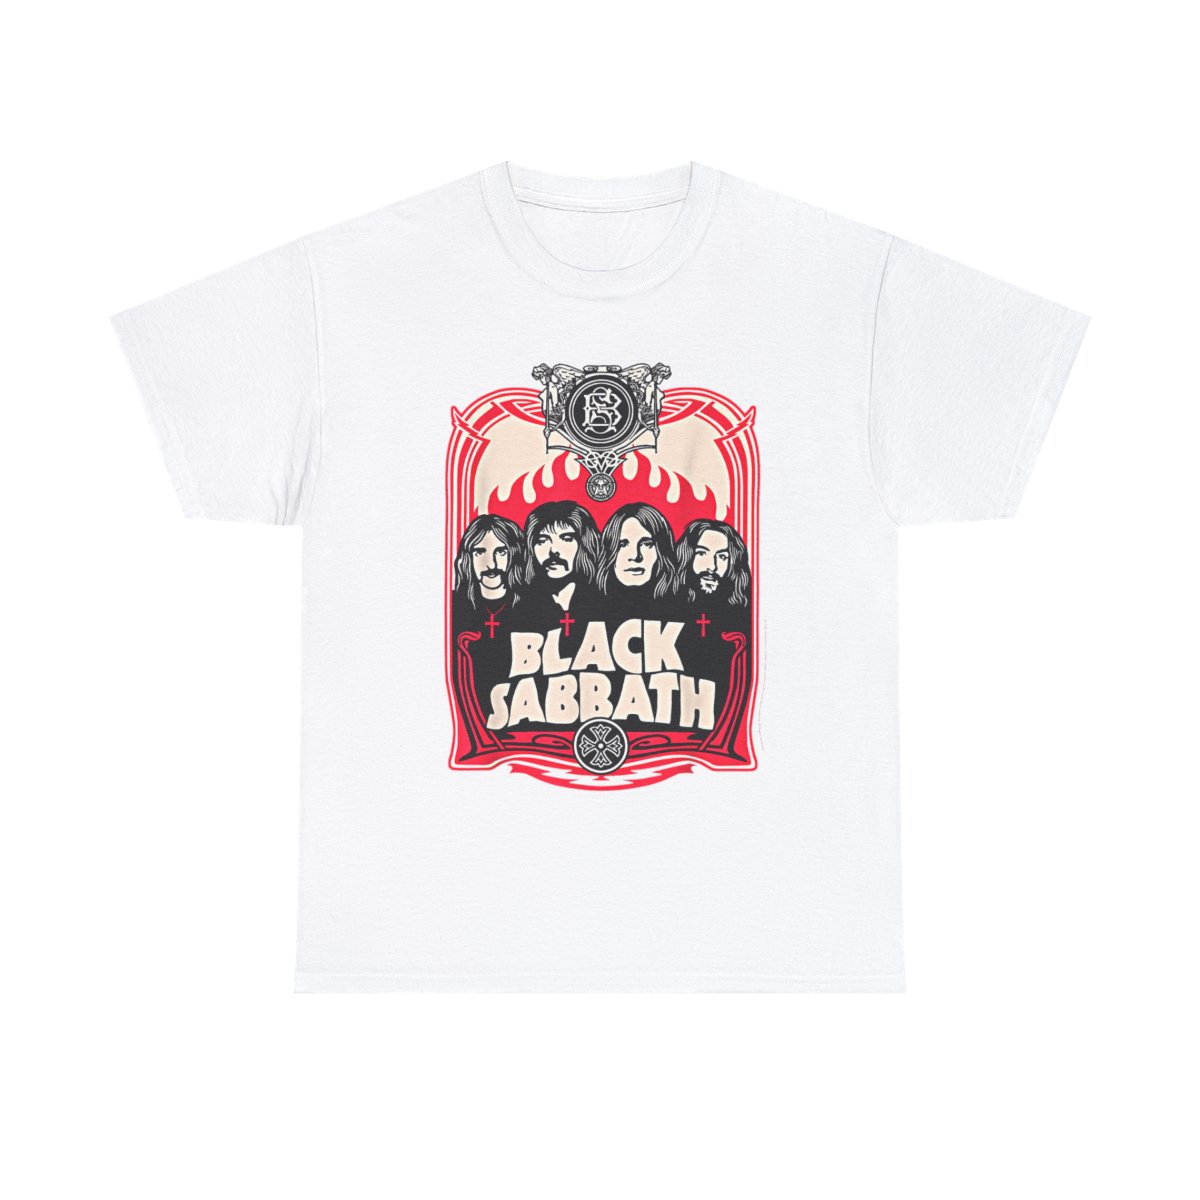 Black Sabbath Official Red Flames Graphic T-Shirt